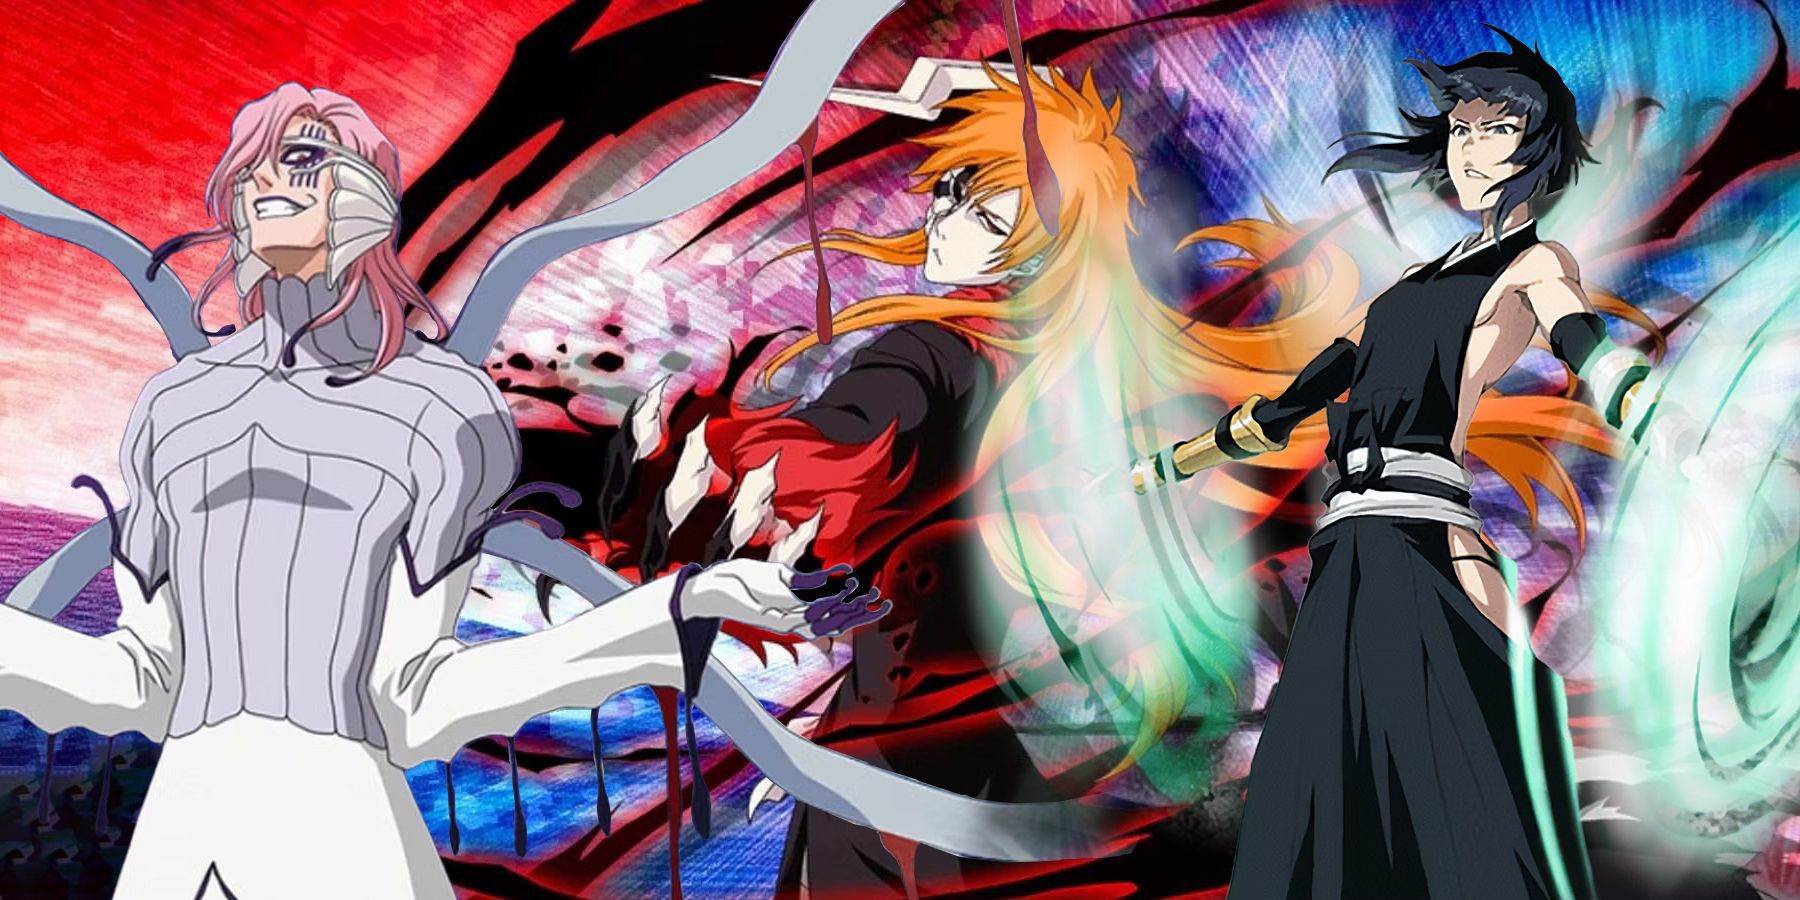 Fullbring Ichigo Kurosaki Bankai - Bleach Brave Souls, Bleach Brave Souls  Fullbring Ichigo Kurosaki Bankai Getsuga Tensho!, By Bleach Animated World